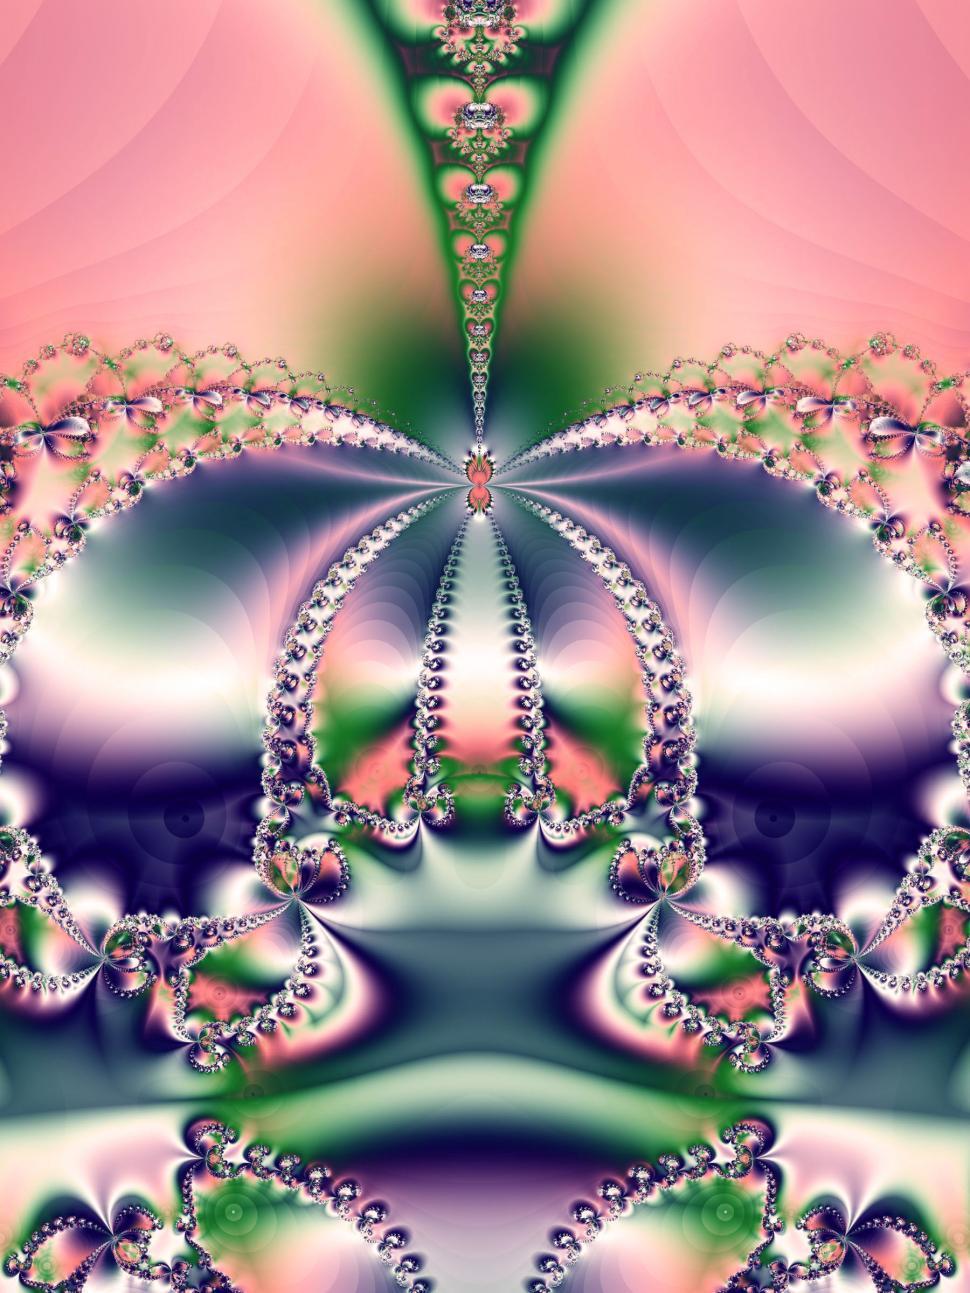 Free Image of Crown fractal  